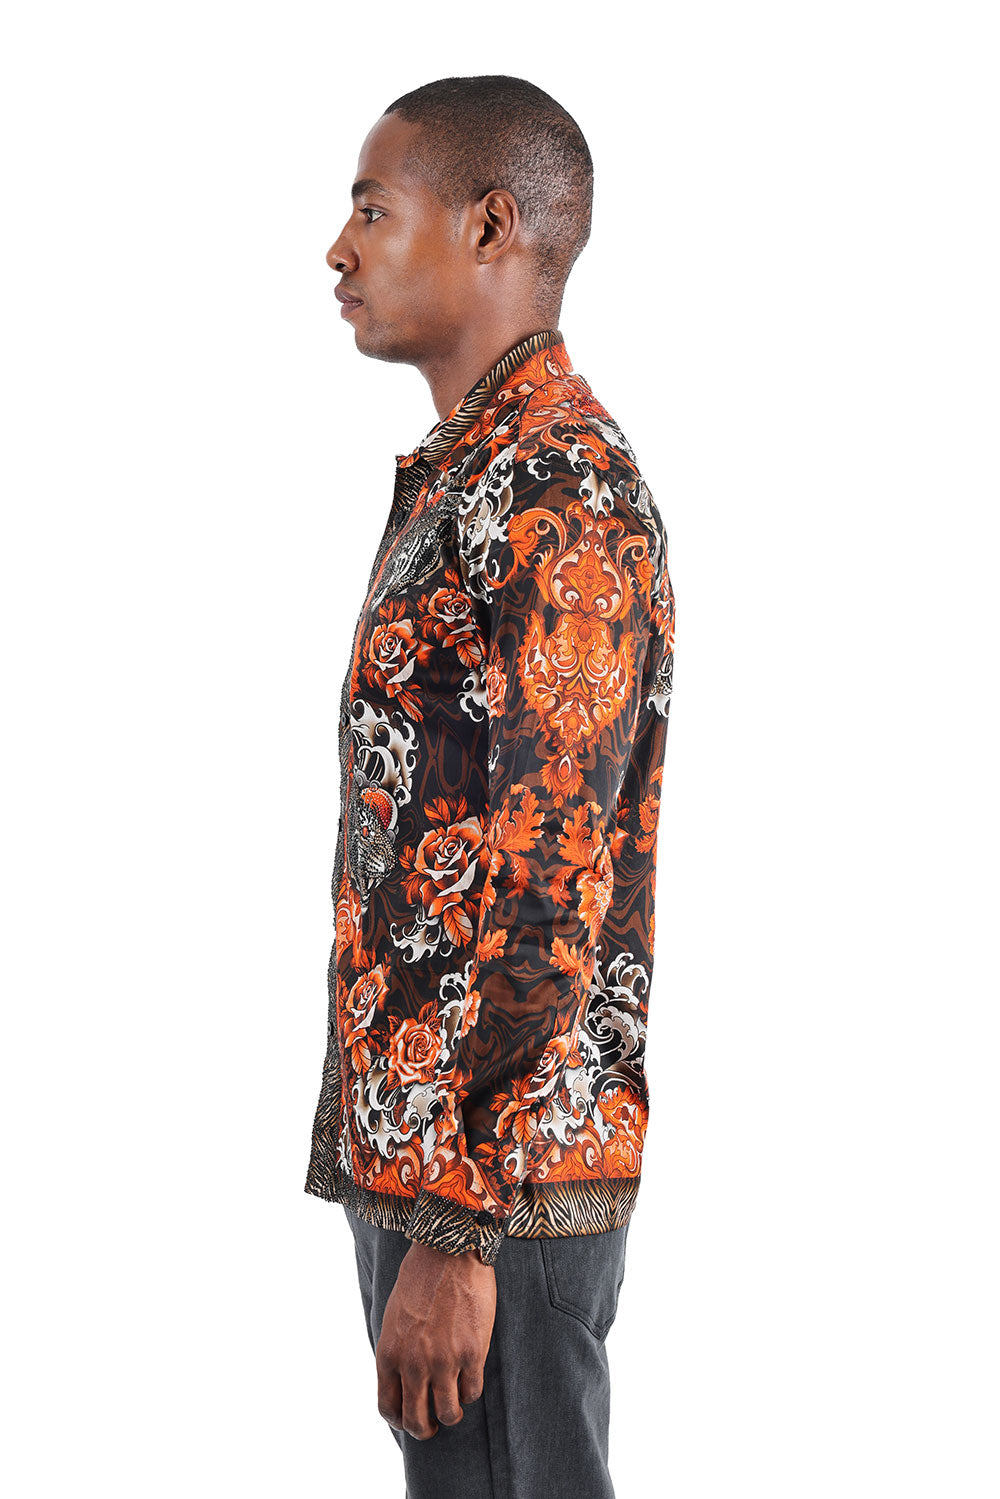 BARABAS Men's Floral Tiger Rhinestone Long Sleeve Shirts 3SPR407 Black